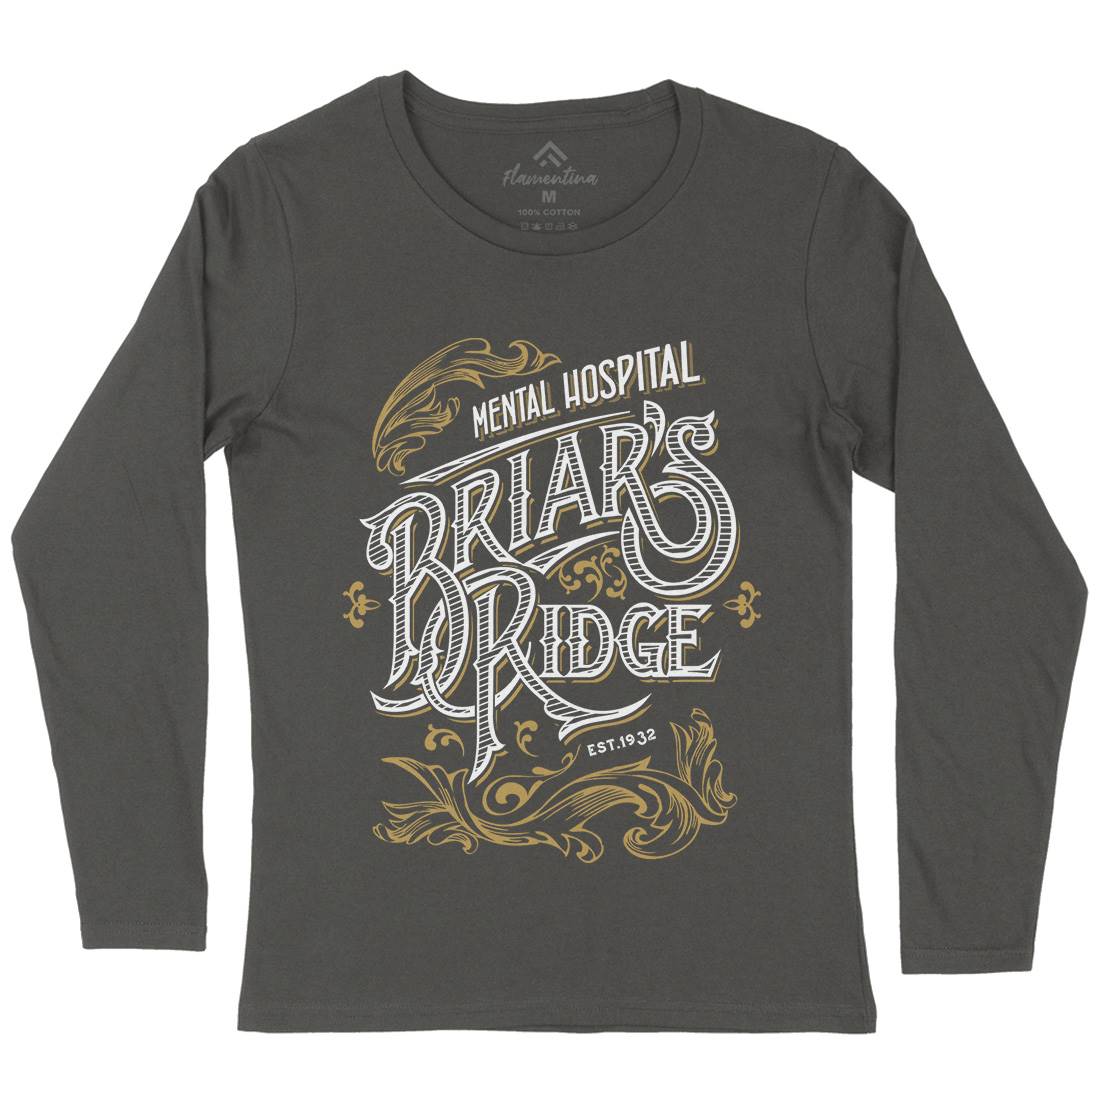 Briar Ridge Womens Long Sleeve T-Shirt Retro D367